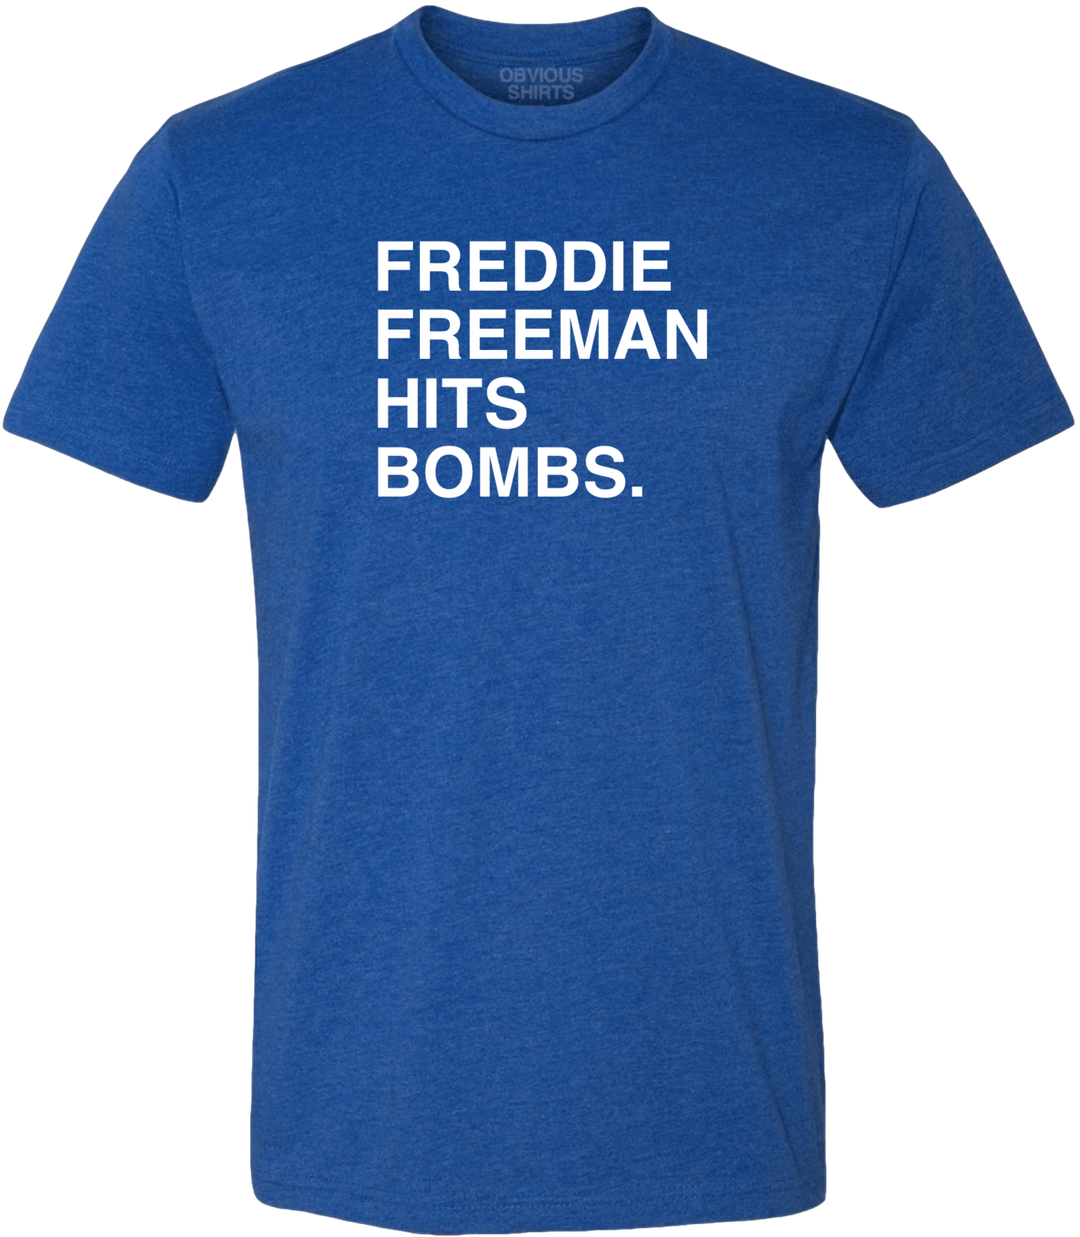 FREDDIE FREEMAN HIT BOMBS. - OBVIOUS SHIRTS.